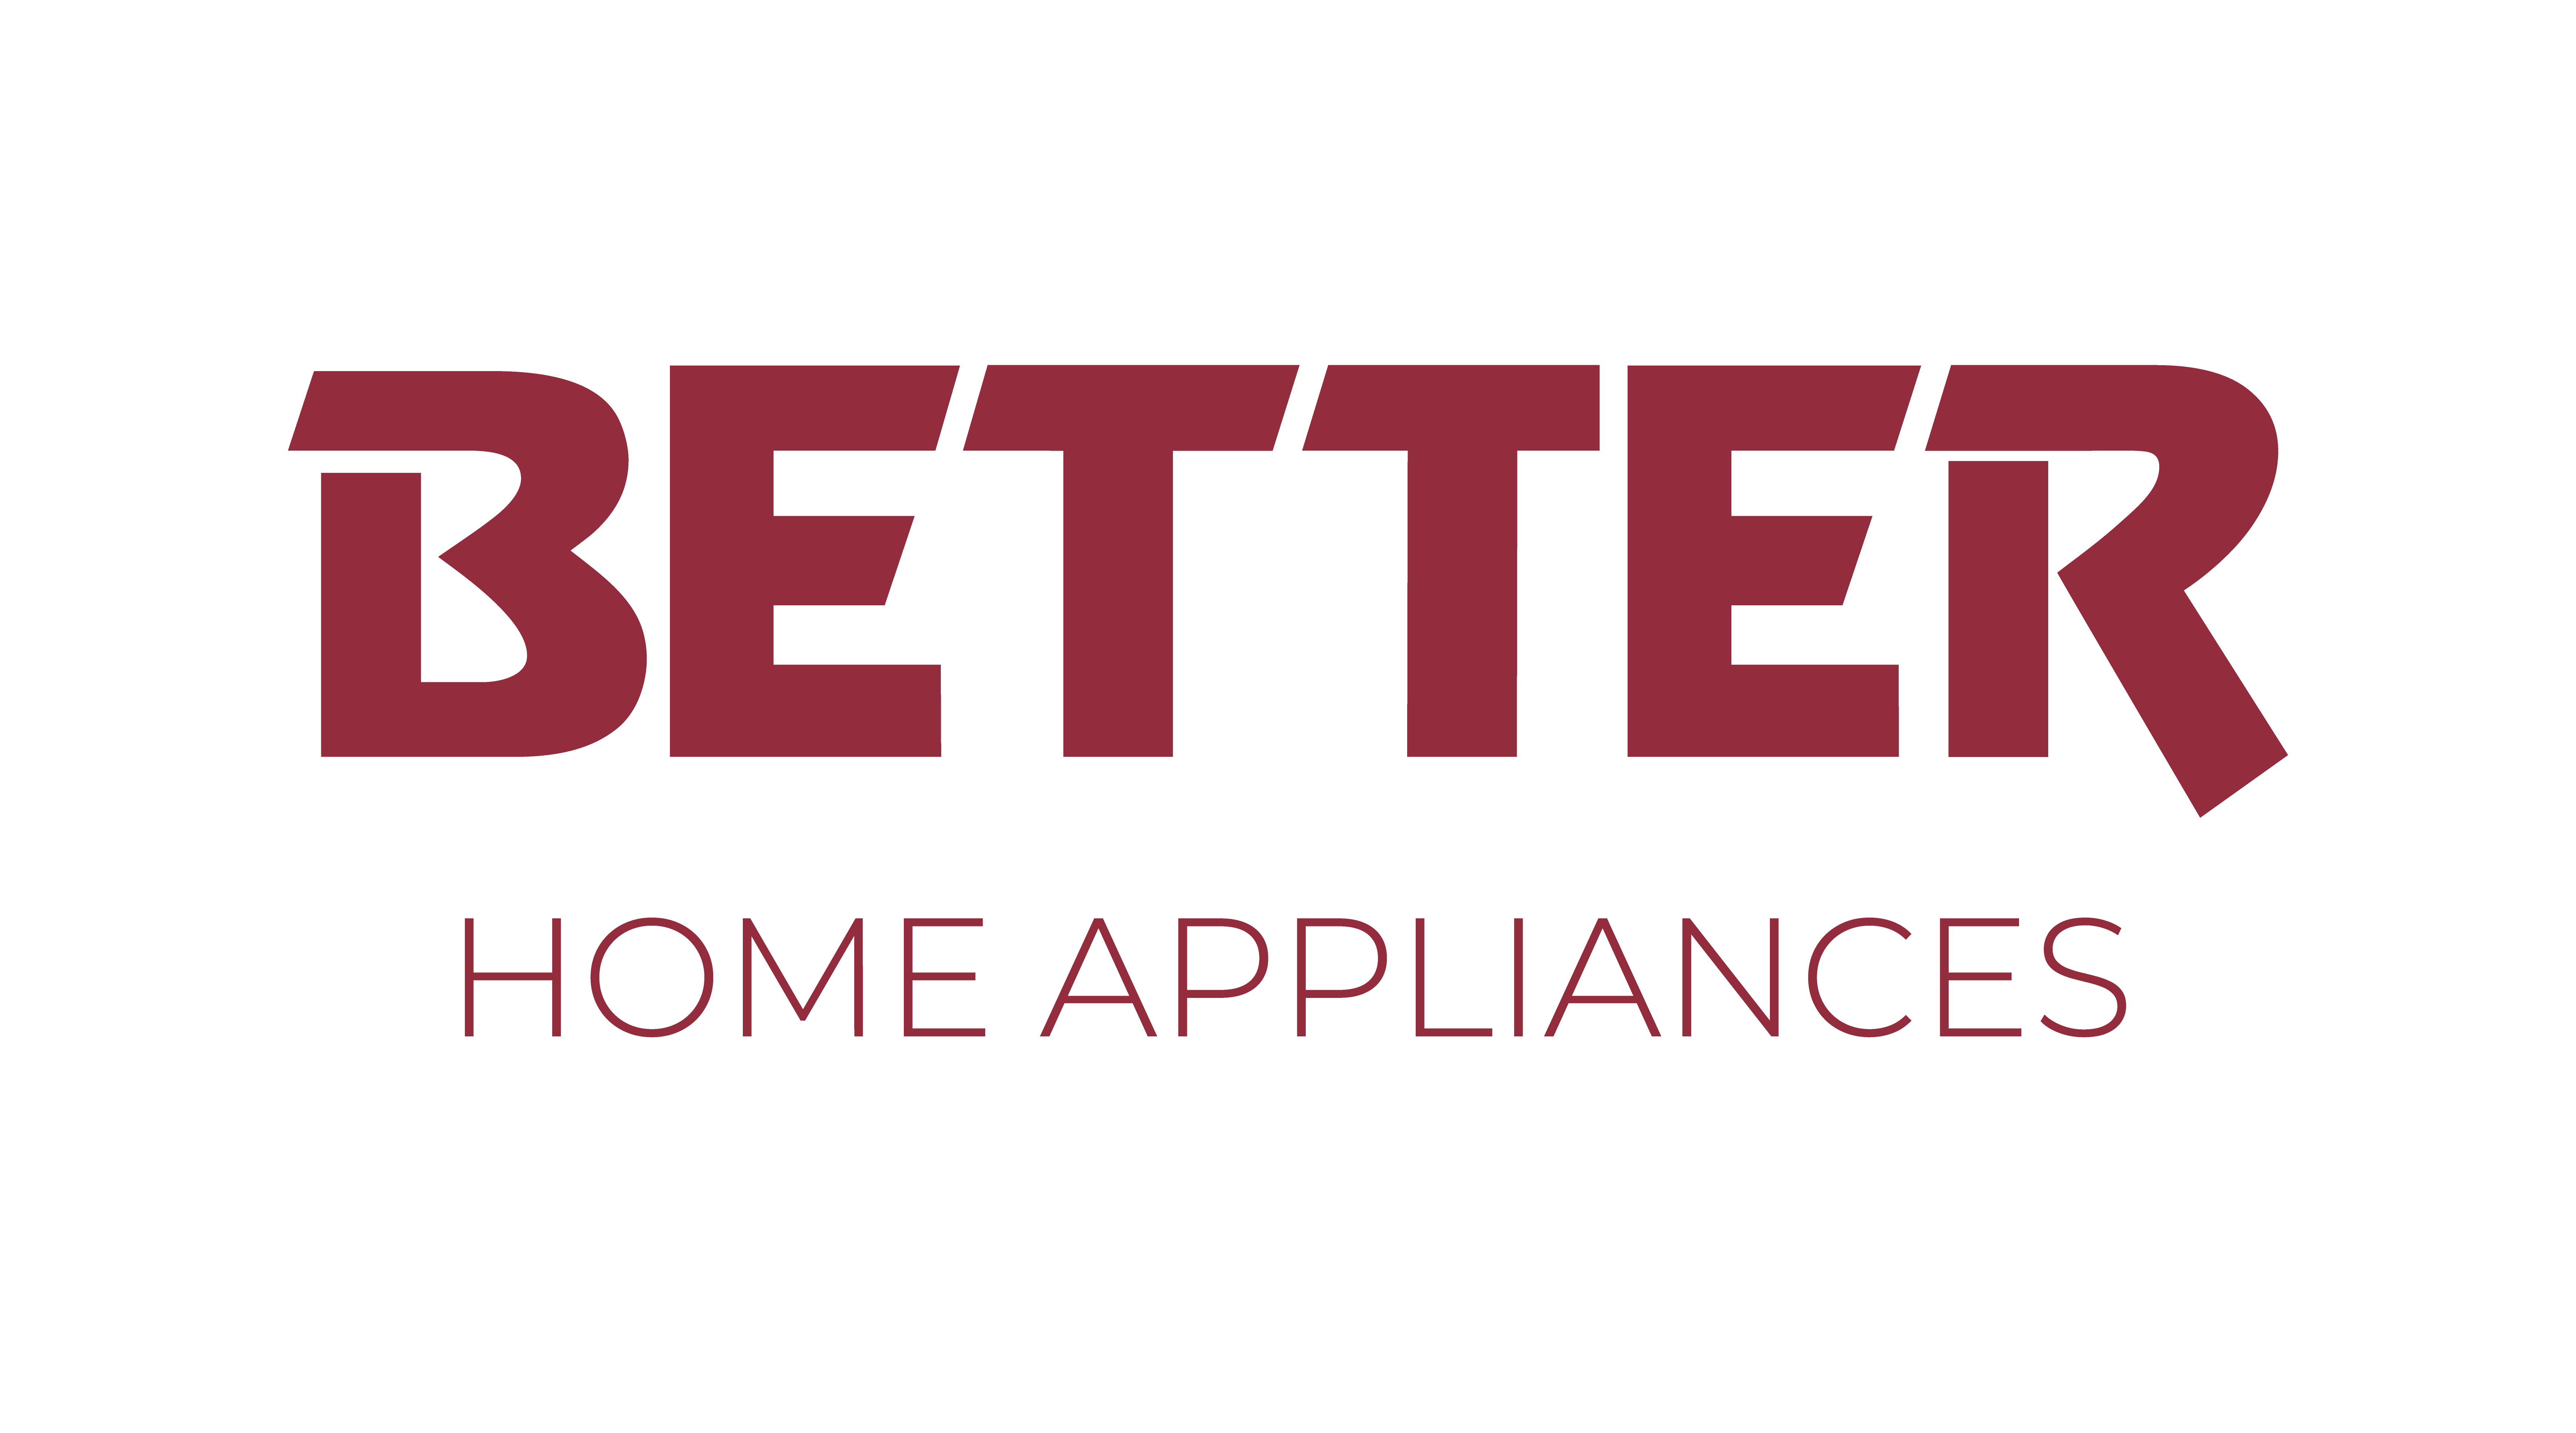 Better Home Appliances